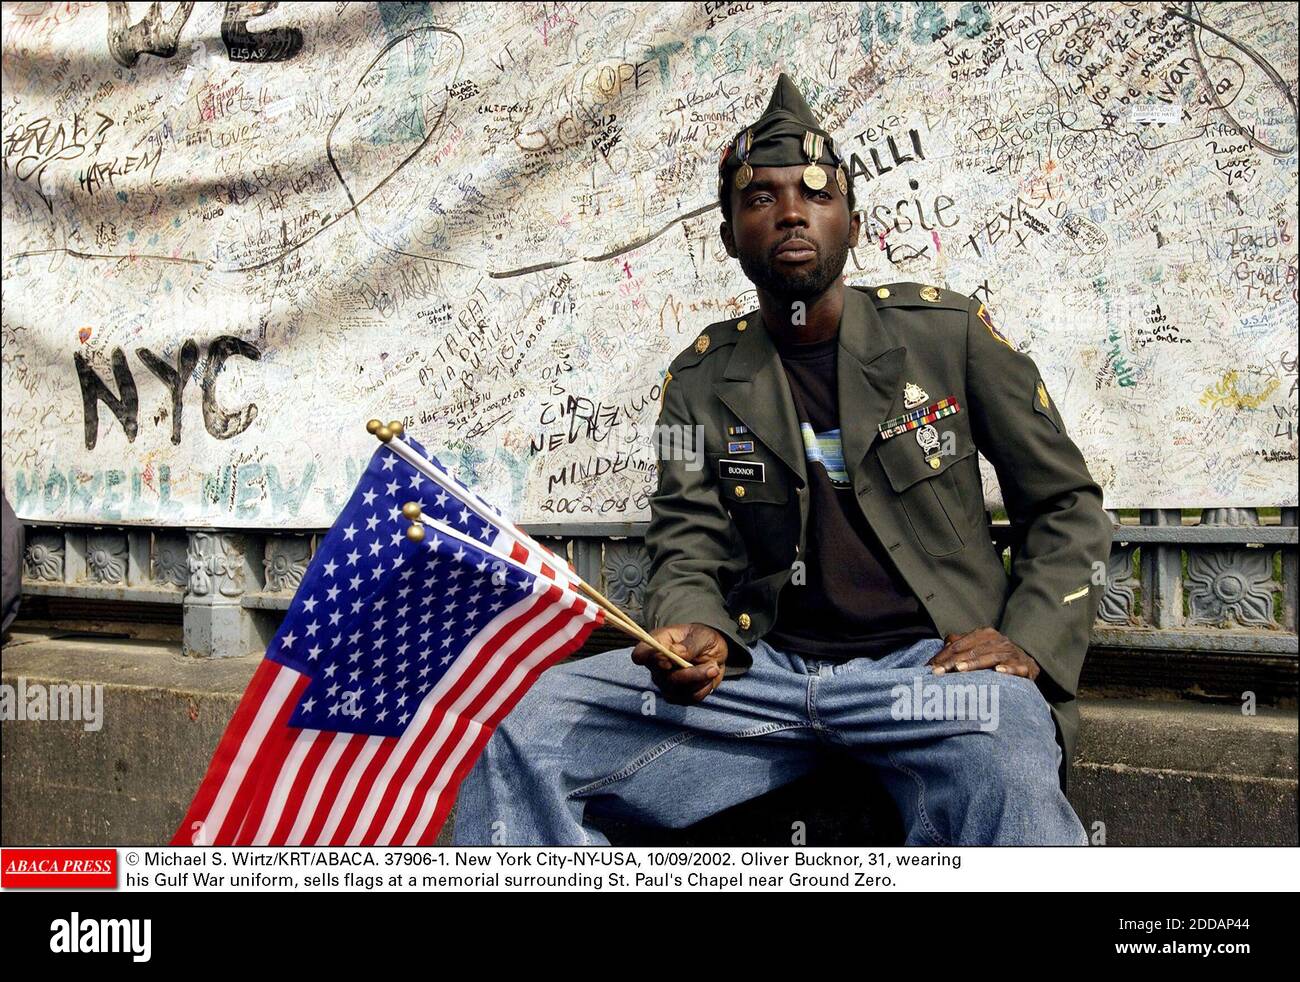 NO FILM, NO VIDEO, NO TV, NO DOCUMENTARY - © Michael S. Wirtz/KRT/ABACA. 37906-1. New York City-NY-USA, 10/09/2002. Oliver Bucknor, 31, wearing his Gulf War uniform, sells flags at a memorial surrounding St. Paul's Chapel near Ground Zero. Stock Photo